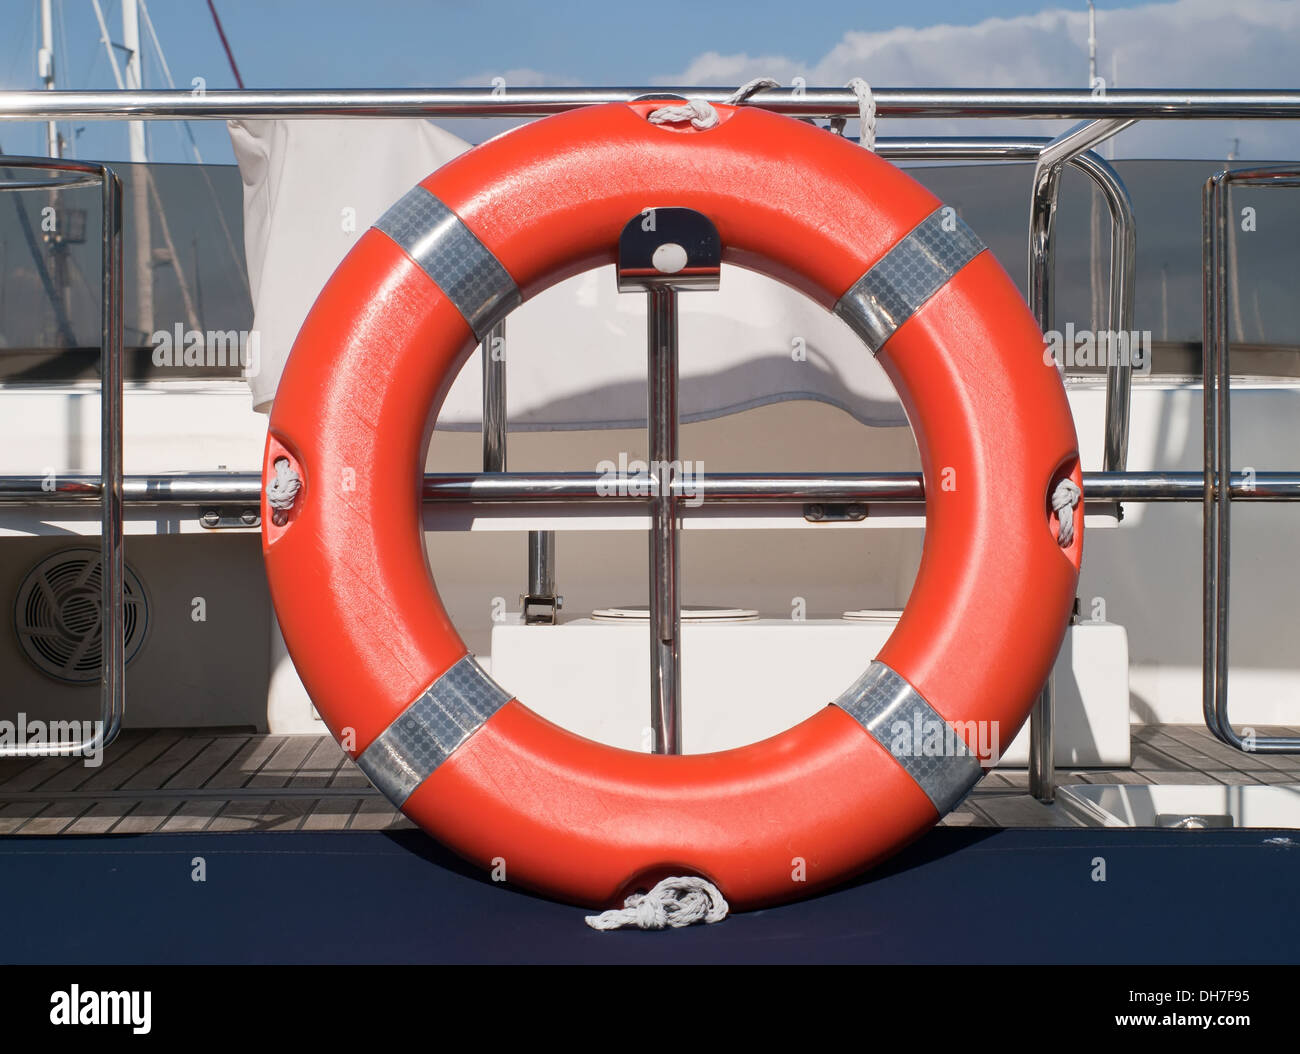 orange rescue ring on the boat Stock Photo